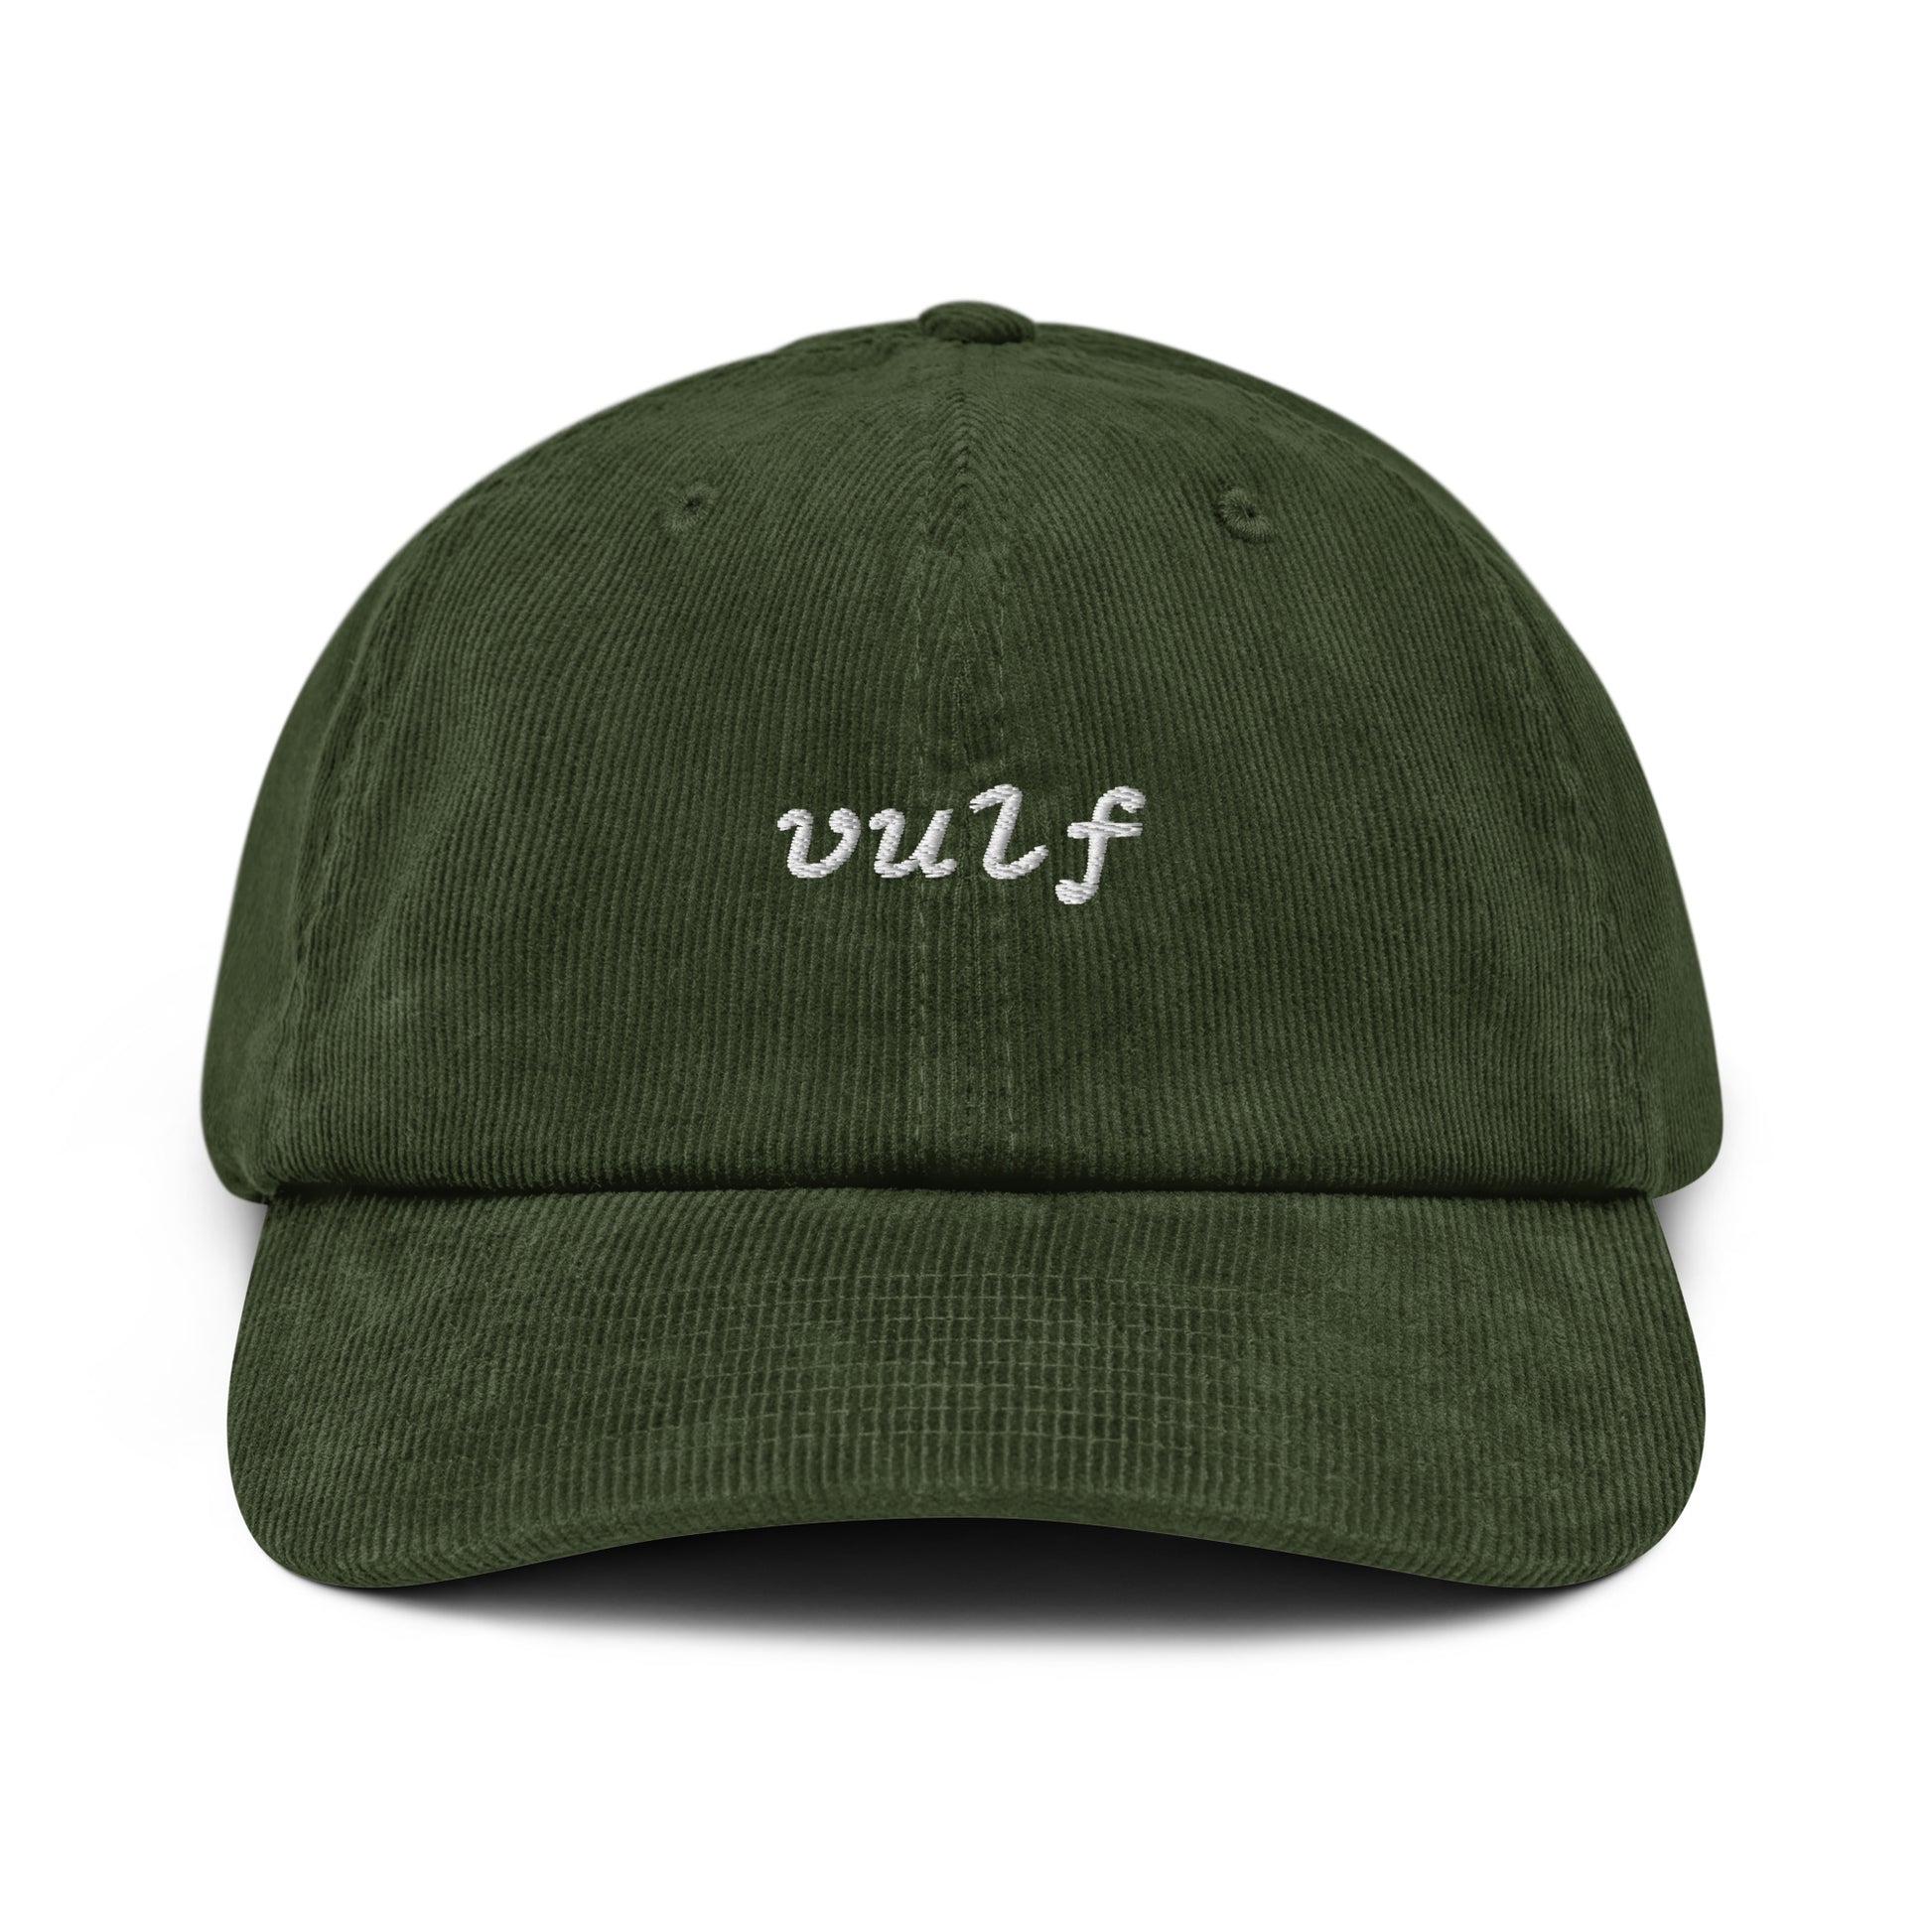 The Hat Green – vulftank